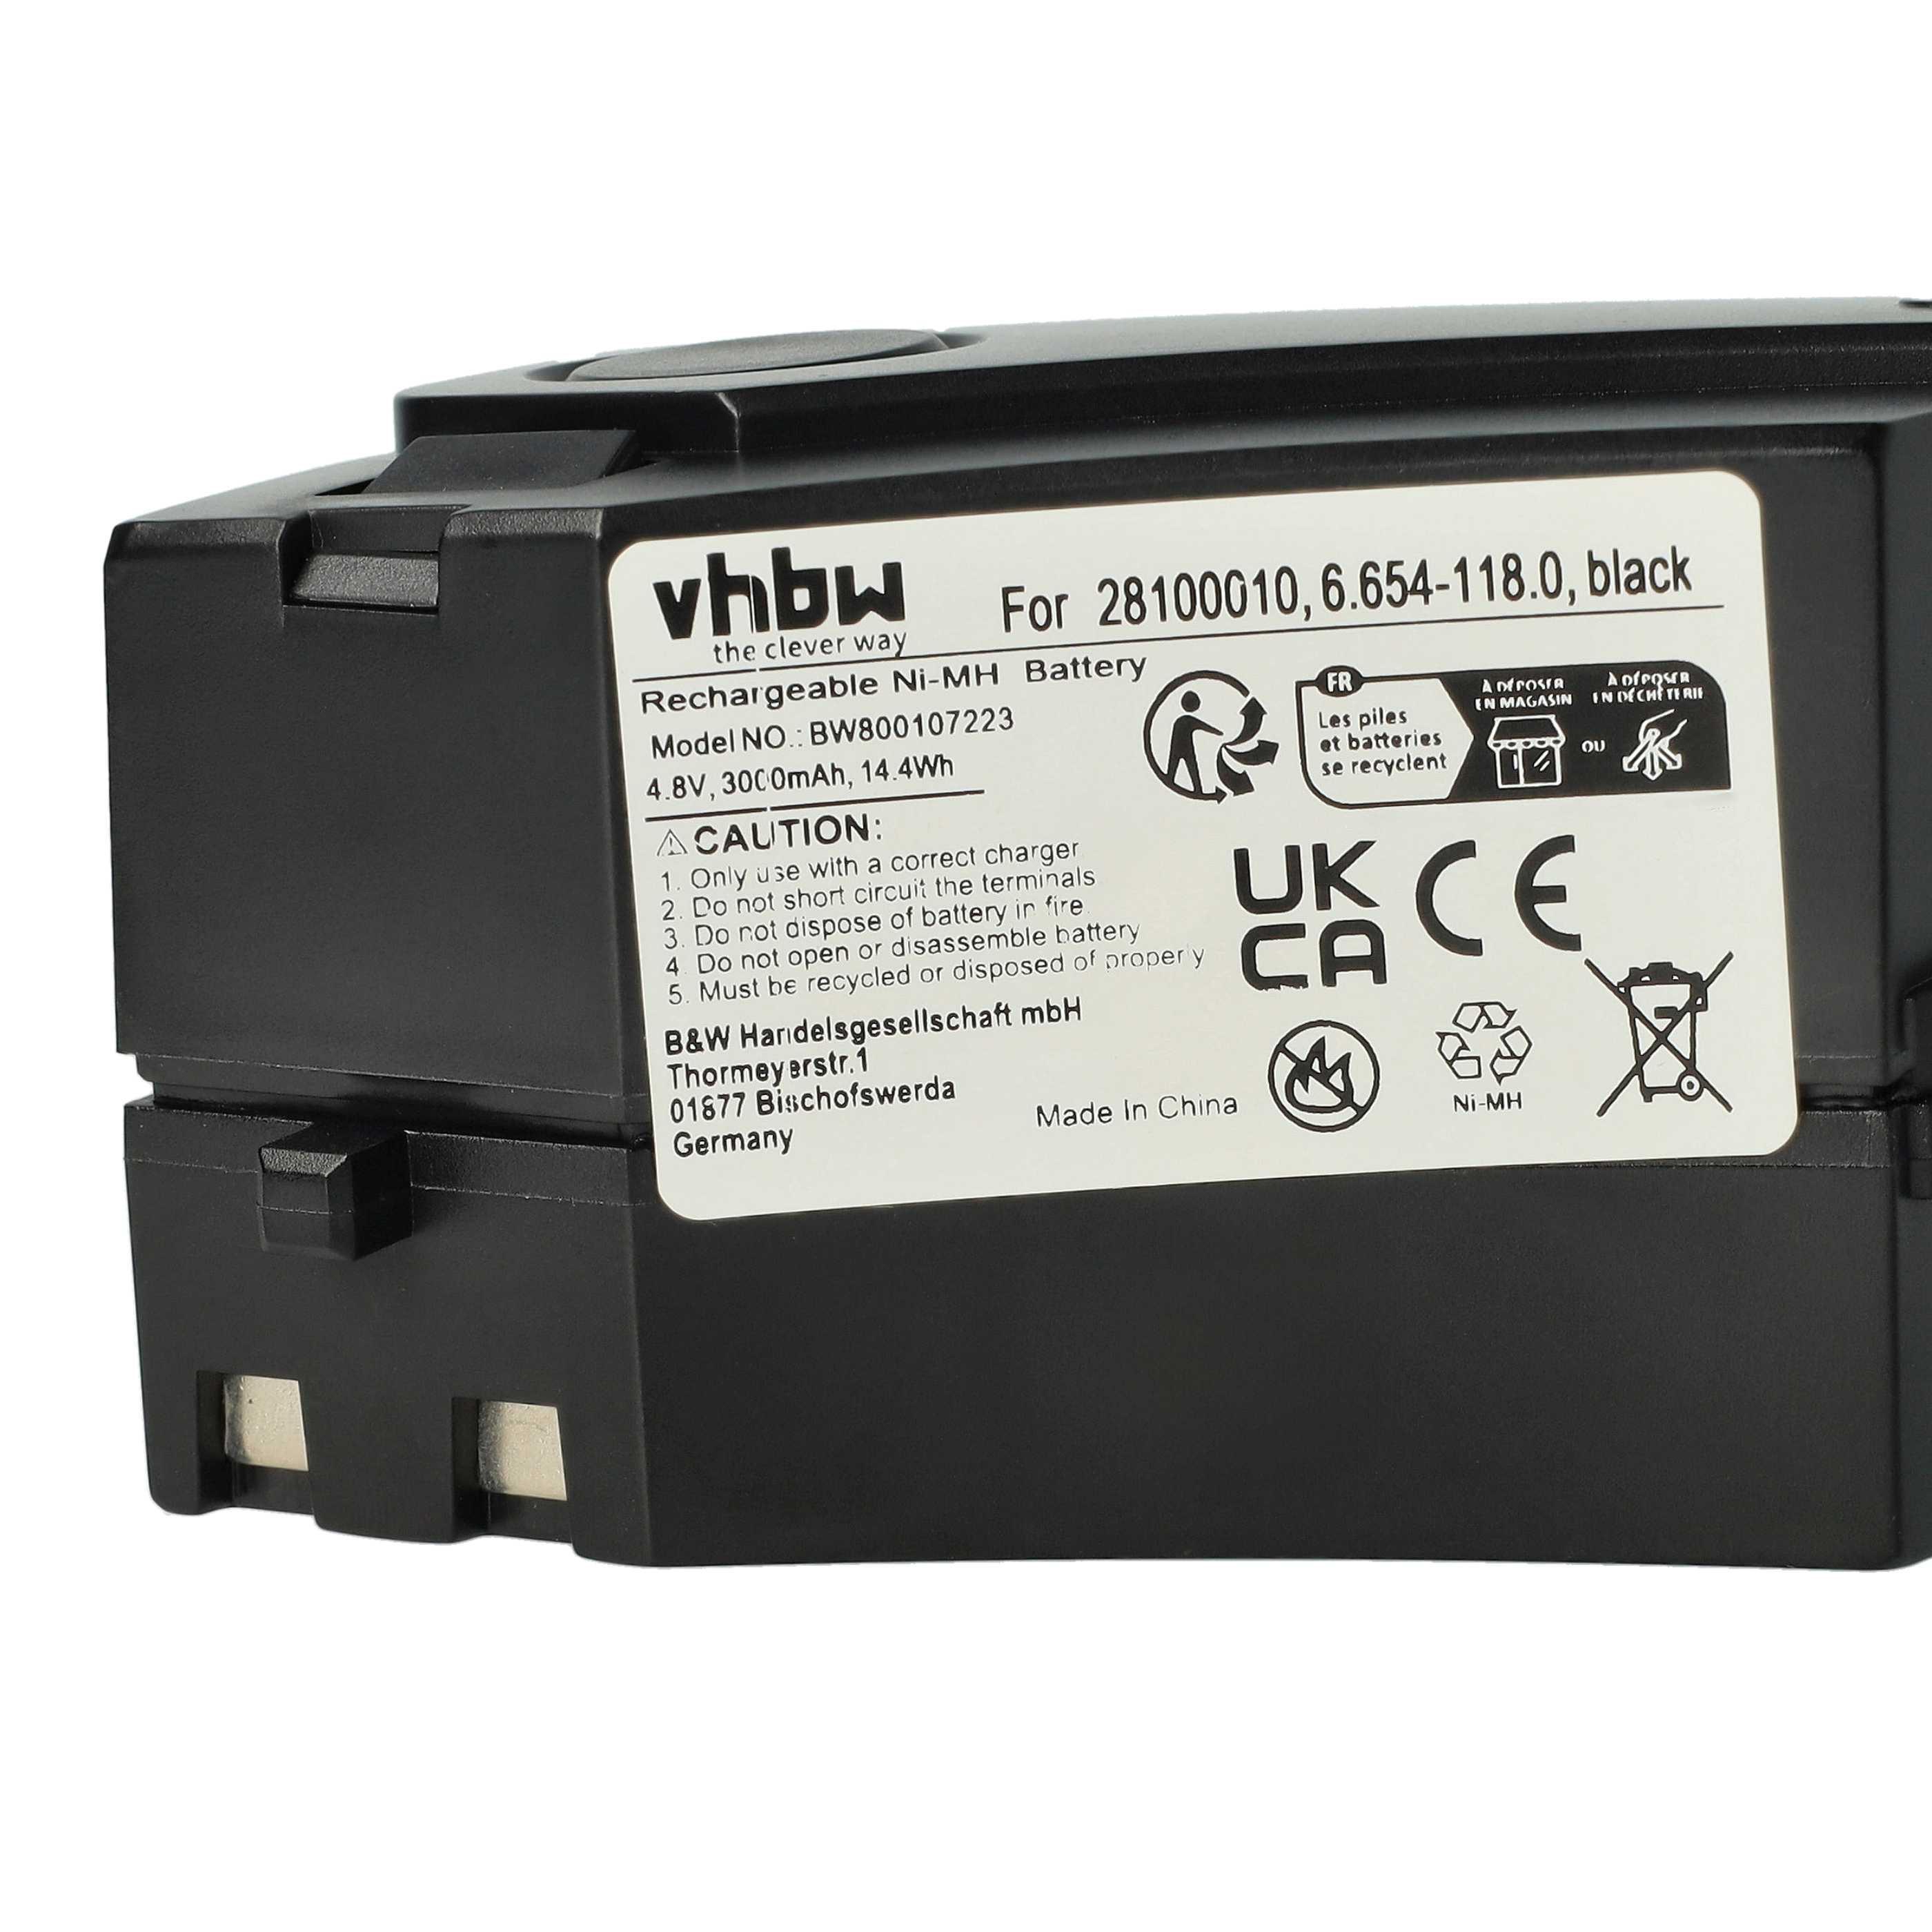 Replacement Battery for Kärcher KB 5, K65 Plus, K55 Pet - 3000mAh, 4.8V, NiMH